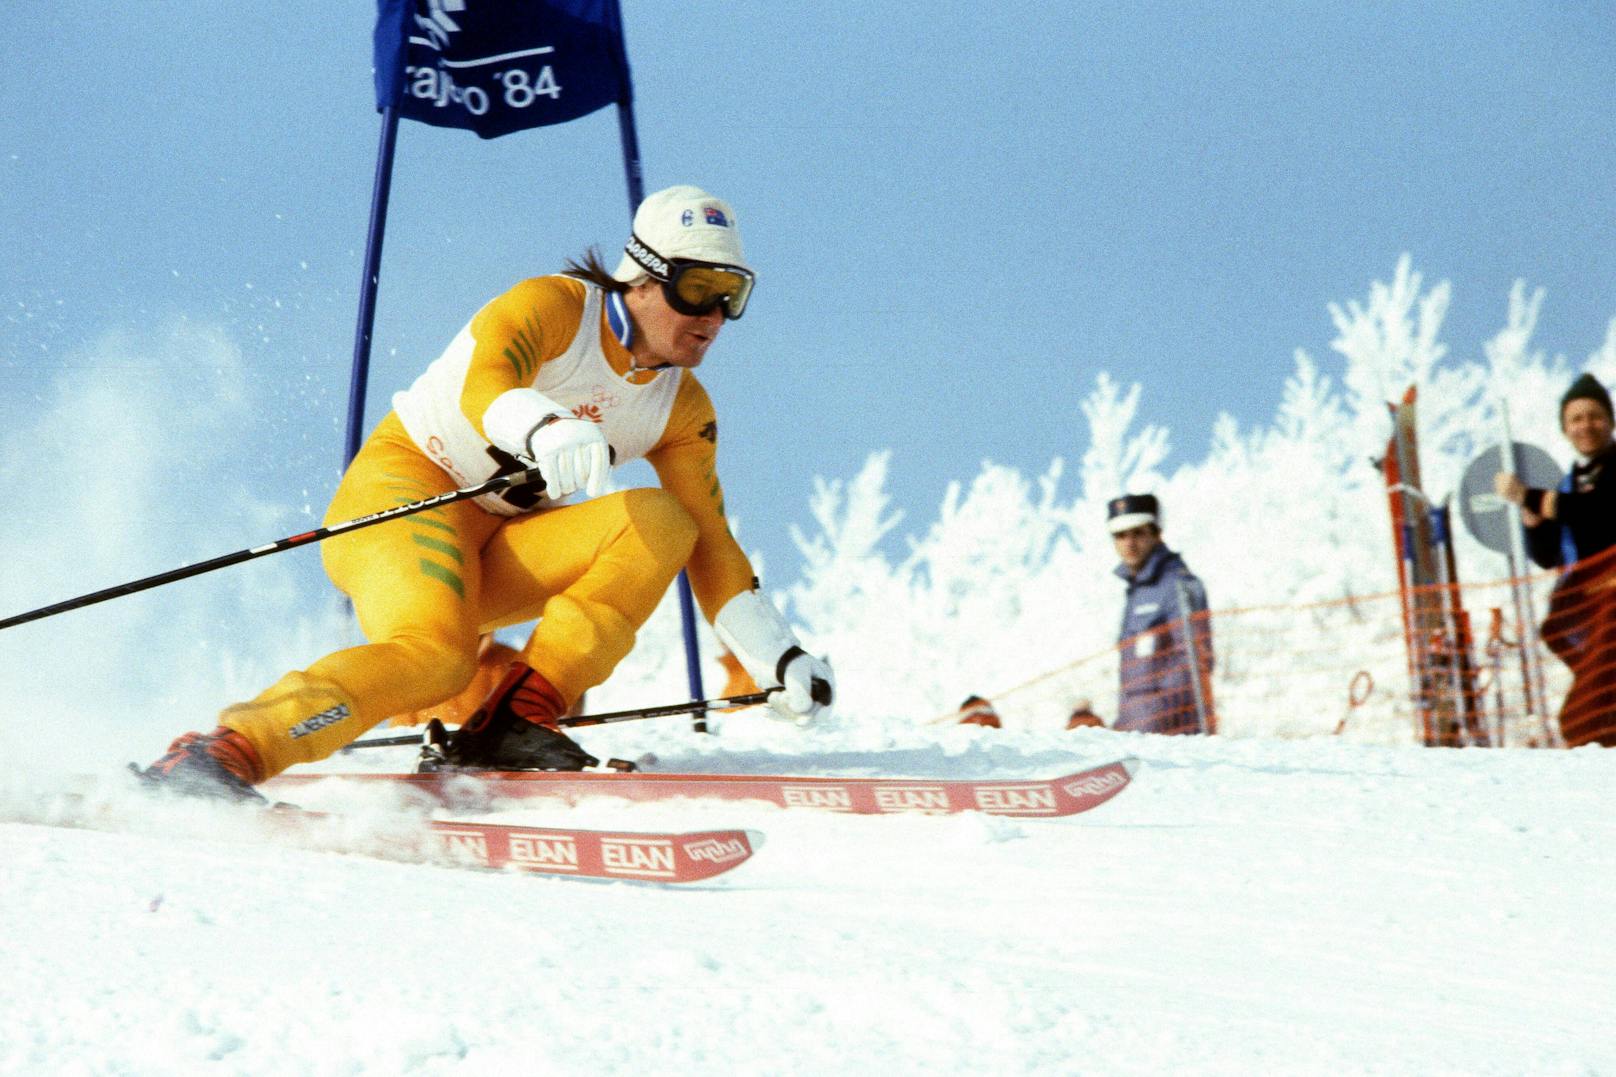 Steven Lee 1984 bei den Winterspielen in Sarajevo.